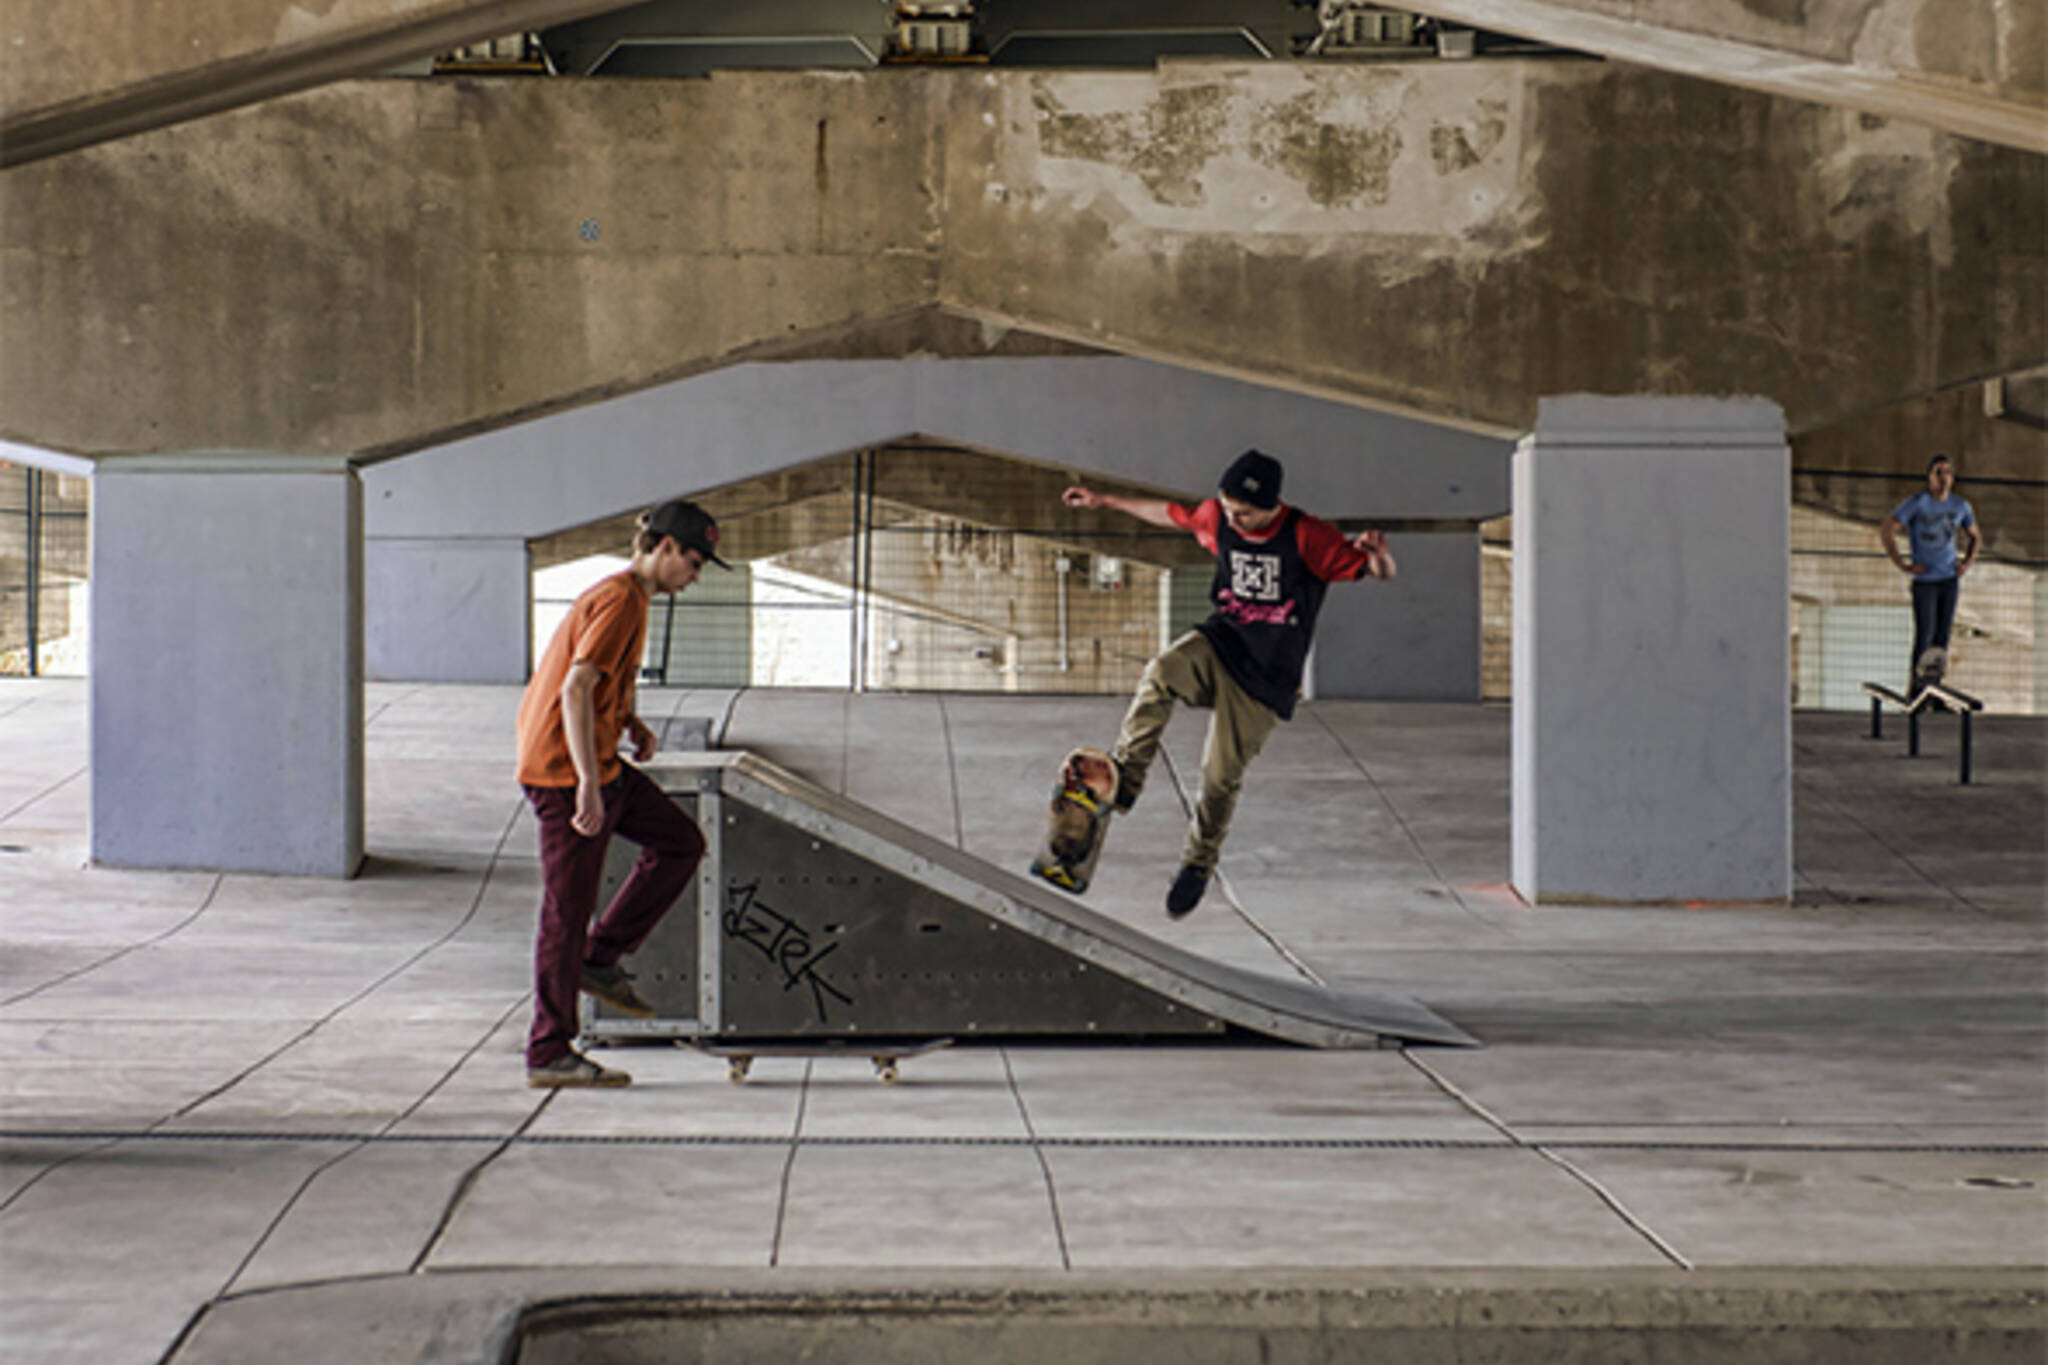 skateboard park toronto